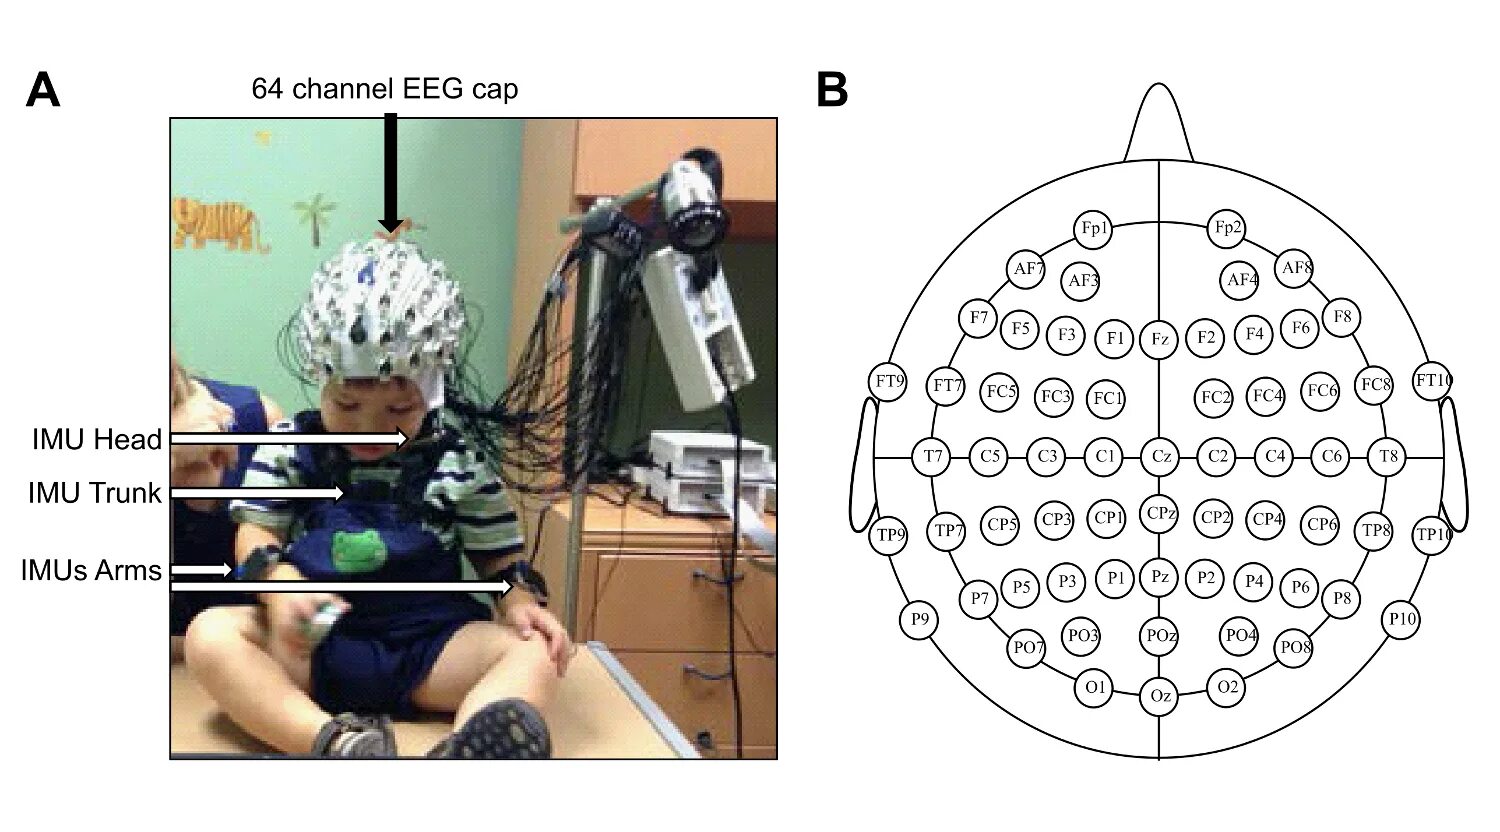 Ээг ребенку платно. Расположение электродов ЭЭГ. ЭЭГ мониторинг головного мозга. ЭЭГ шапочка схема. Электроэнцефалография головного мозга (ЭЭГ).